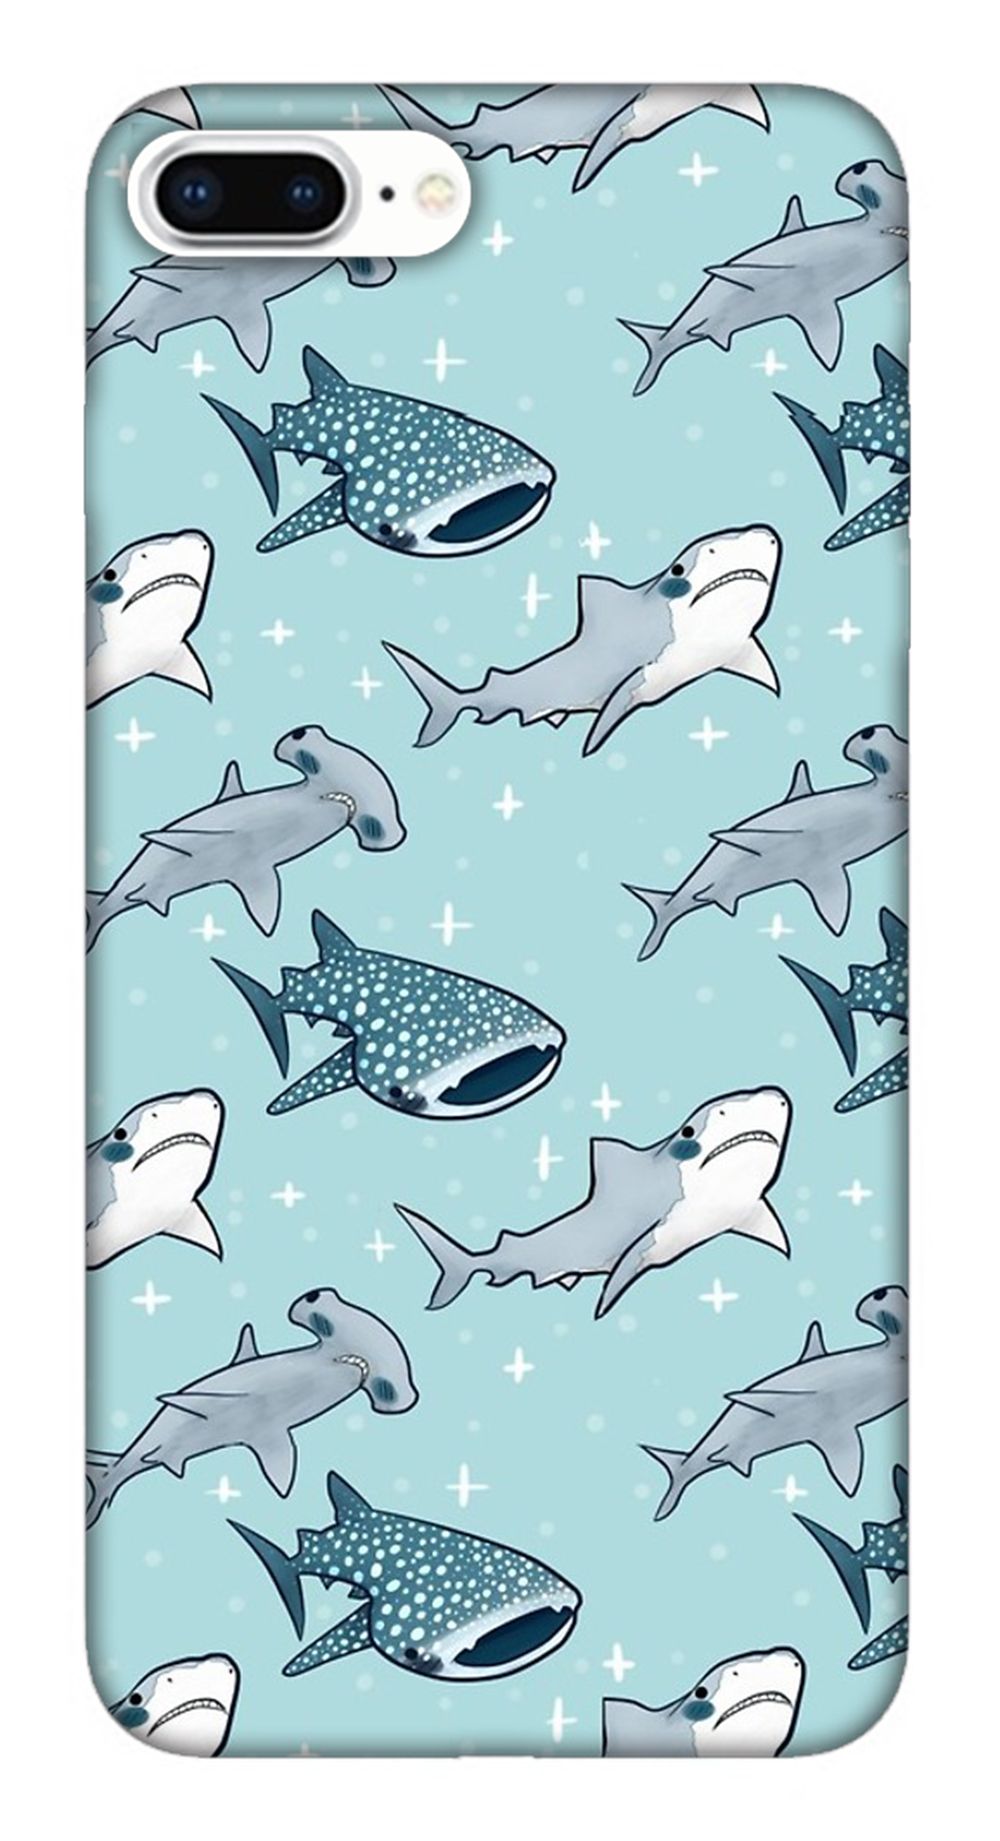 Iphone 8 Plus Shark Case - HD Wallpaper 